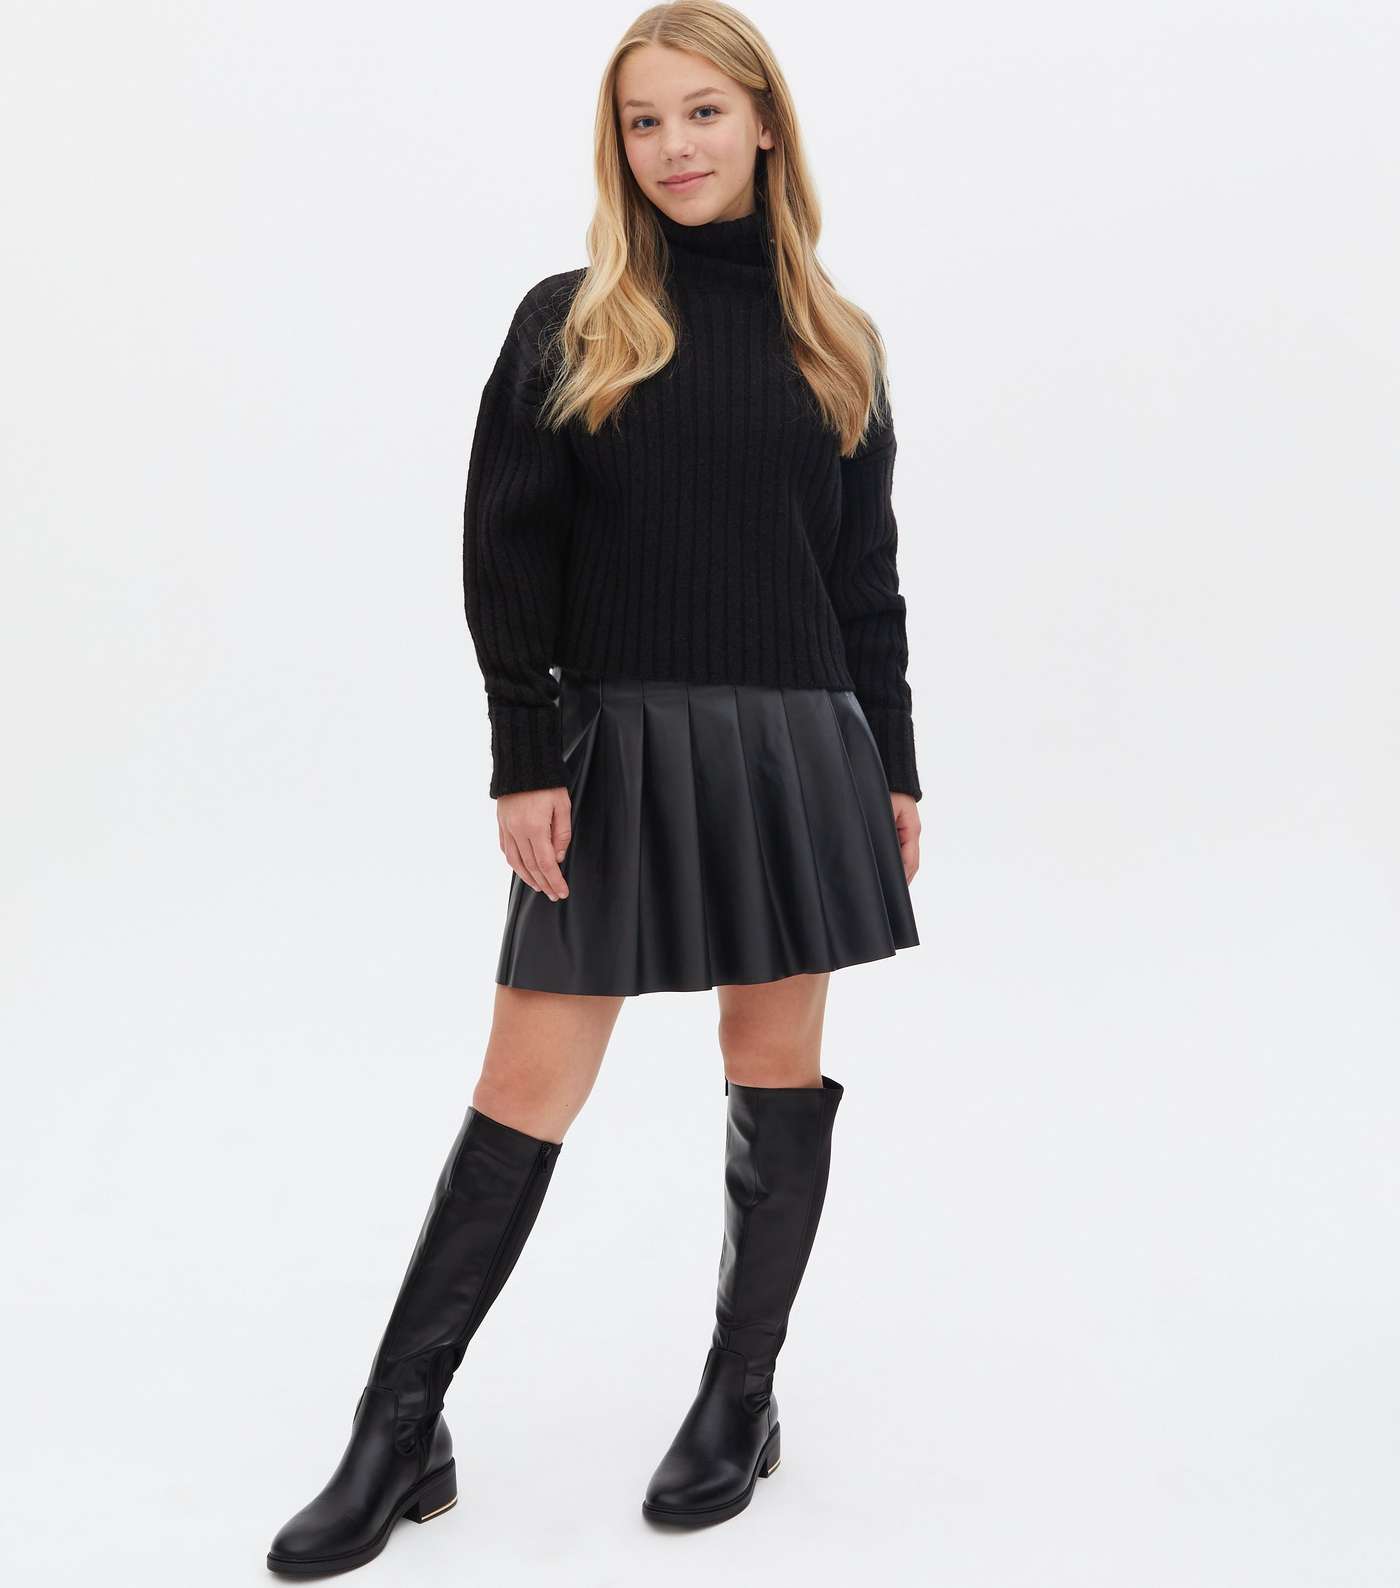 Girls Black Leather-Look Metal Trim Knee High Boots Image 2